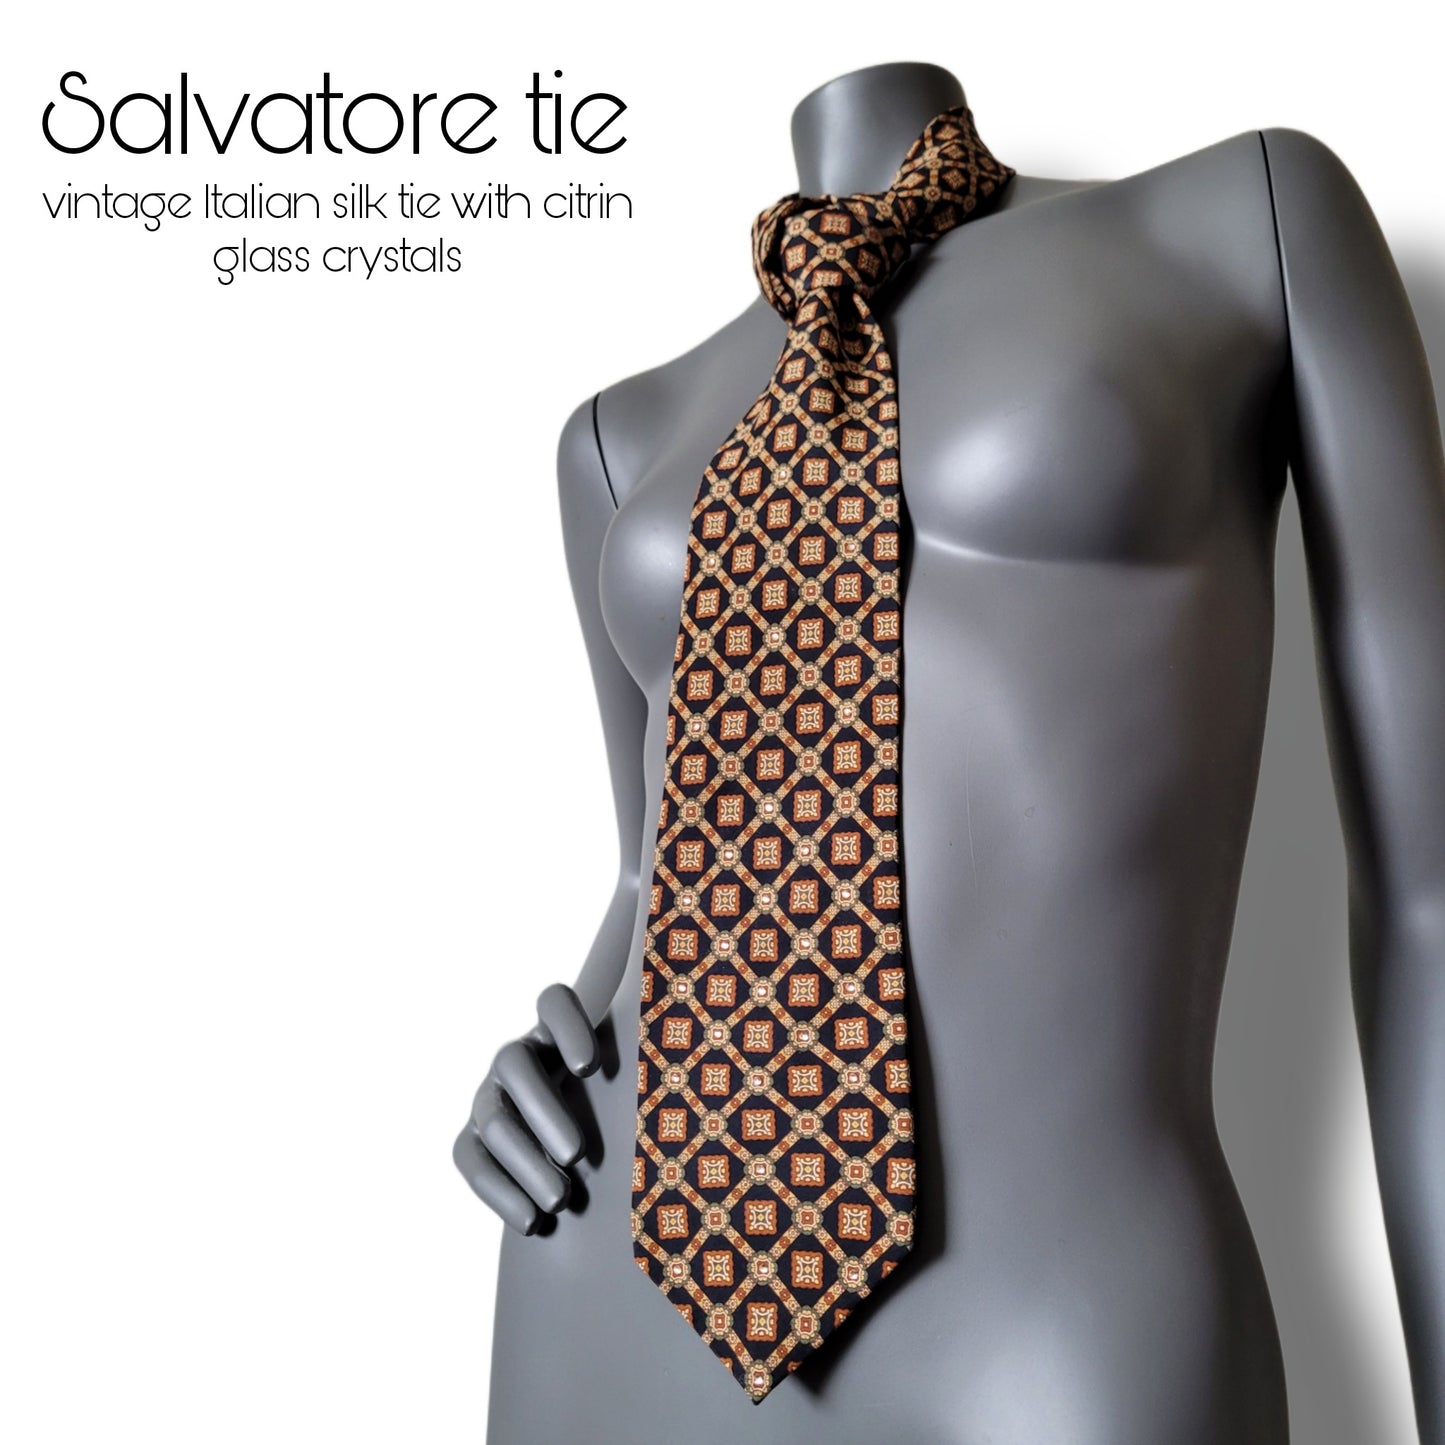 Tie it Together collection: Salvatore tie, vintage Italian silk necktie with citrin glass crystals